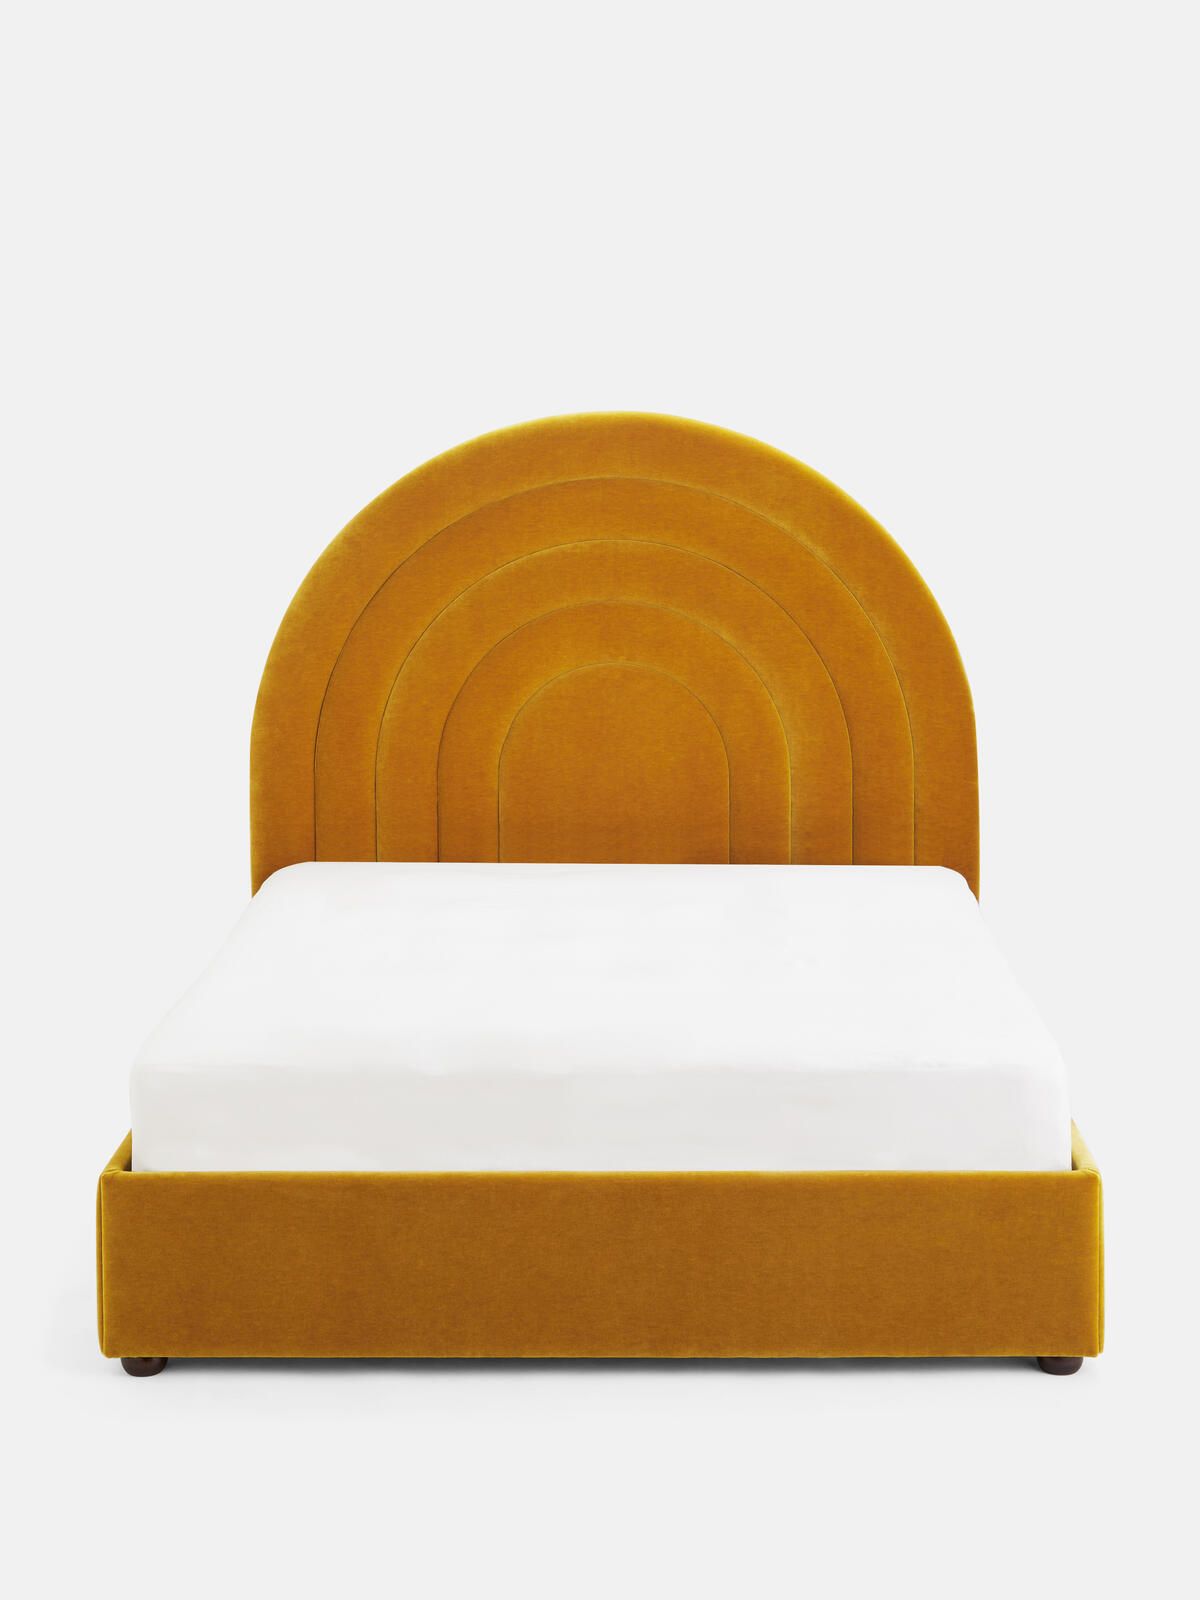 Archway Bed | Soho Home Ltd